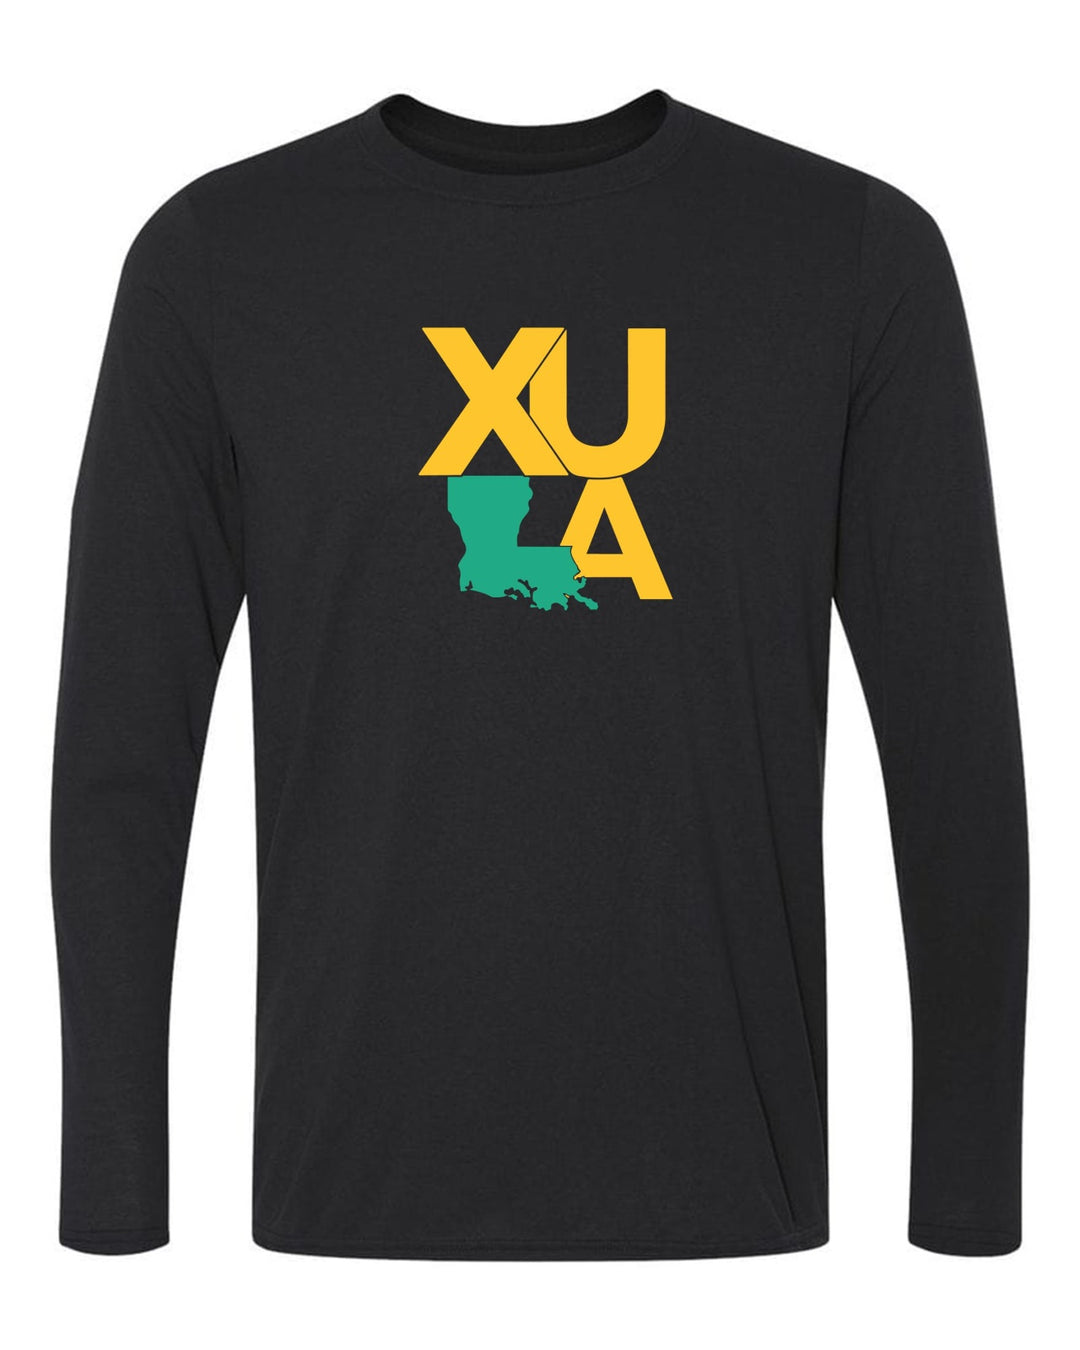 XULA Long-Sleeve Performance Shirt Xavier University Black Mens Small - Third Coast Soccer